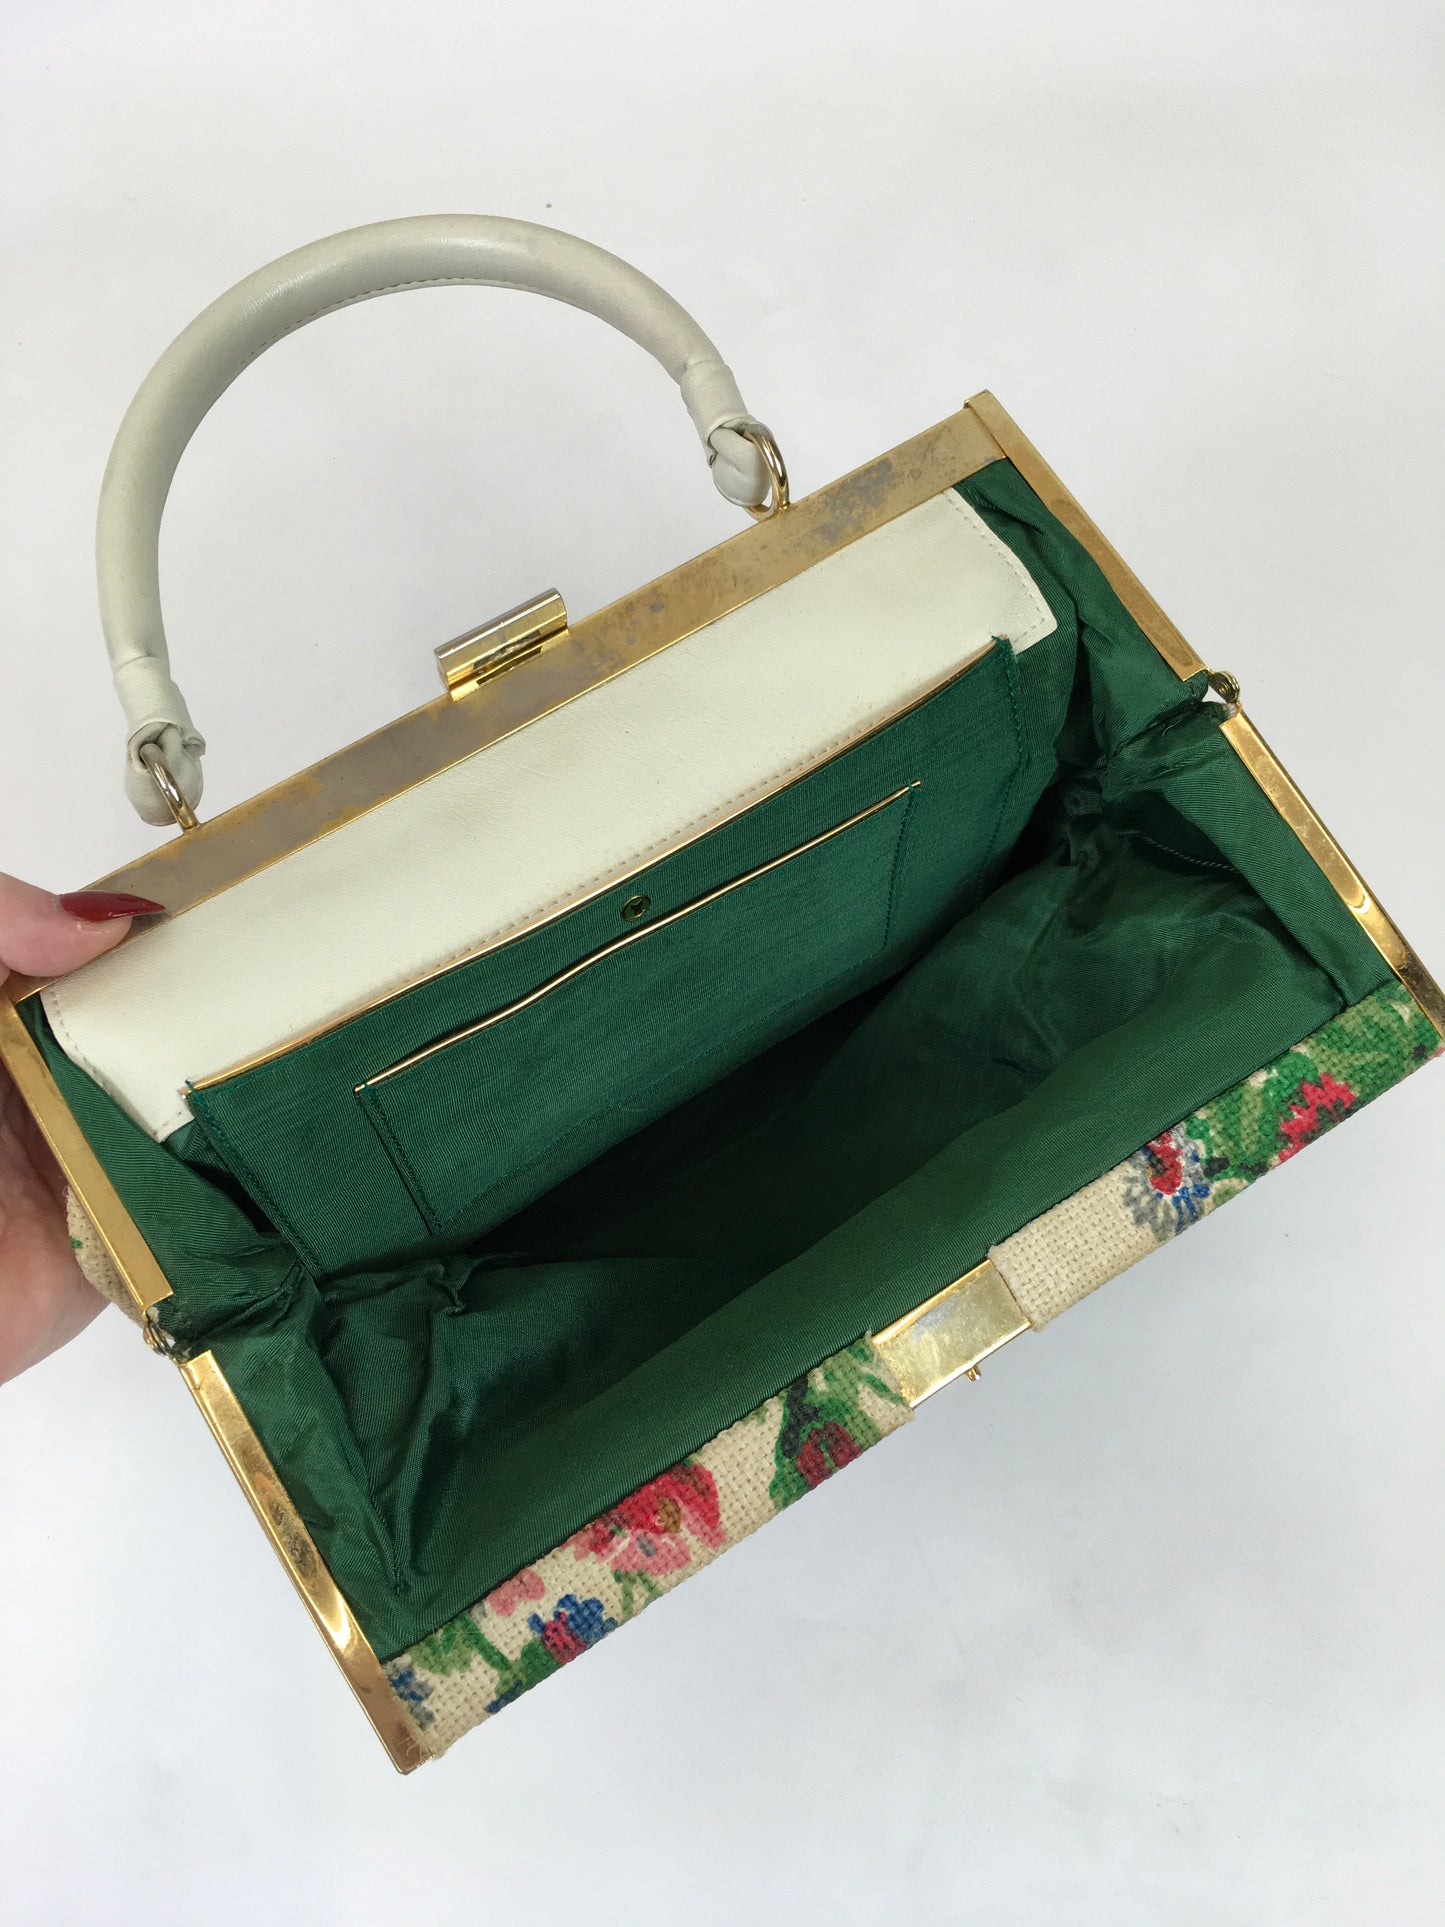 Original 1950’s Fabulous Floral Handbag - With Gold Metalwork Frame and Cream Handle